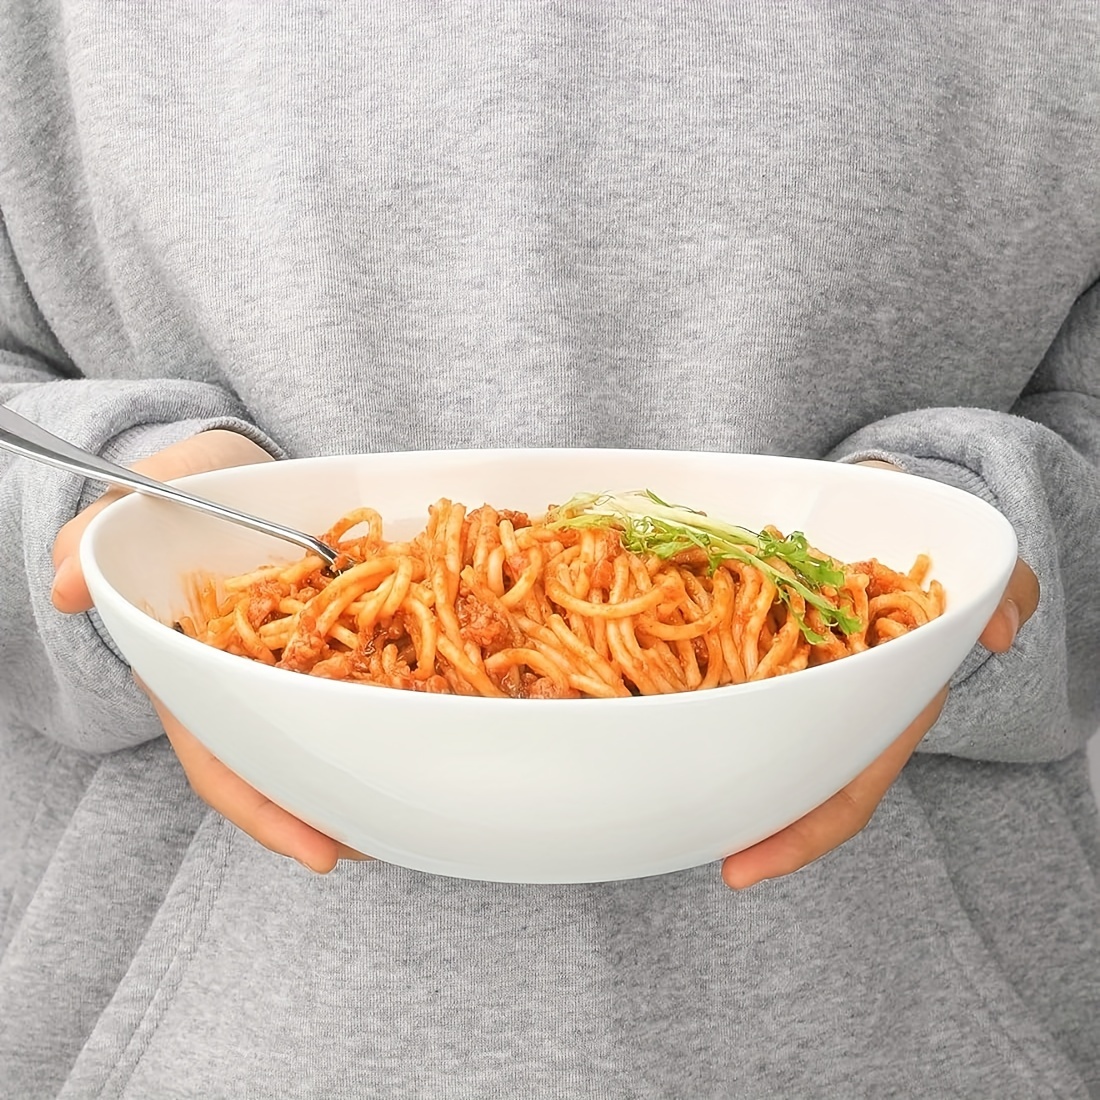 DECORDINE 3 Piece Serving Bowl Set â€“ Elegant White Porcelain Bowls for  Fruit, Salad, Pasta